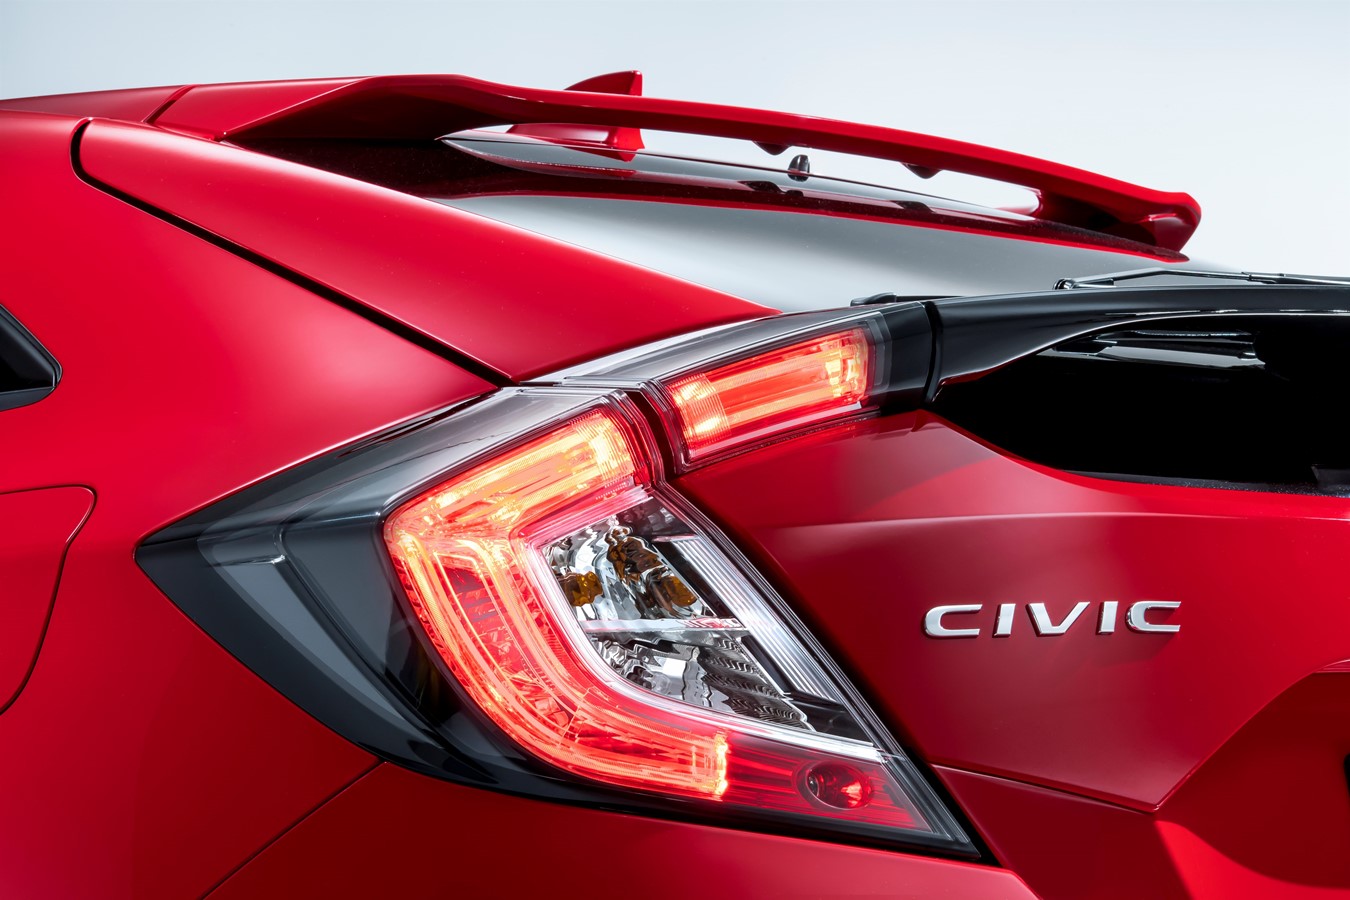 Honda präsentiert Civic Fünftürer am Automobilsalon Paris 2016!